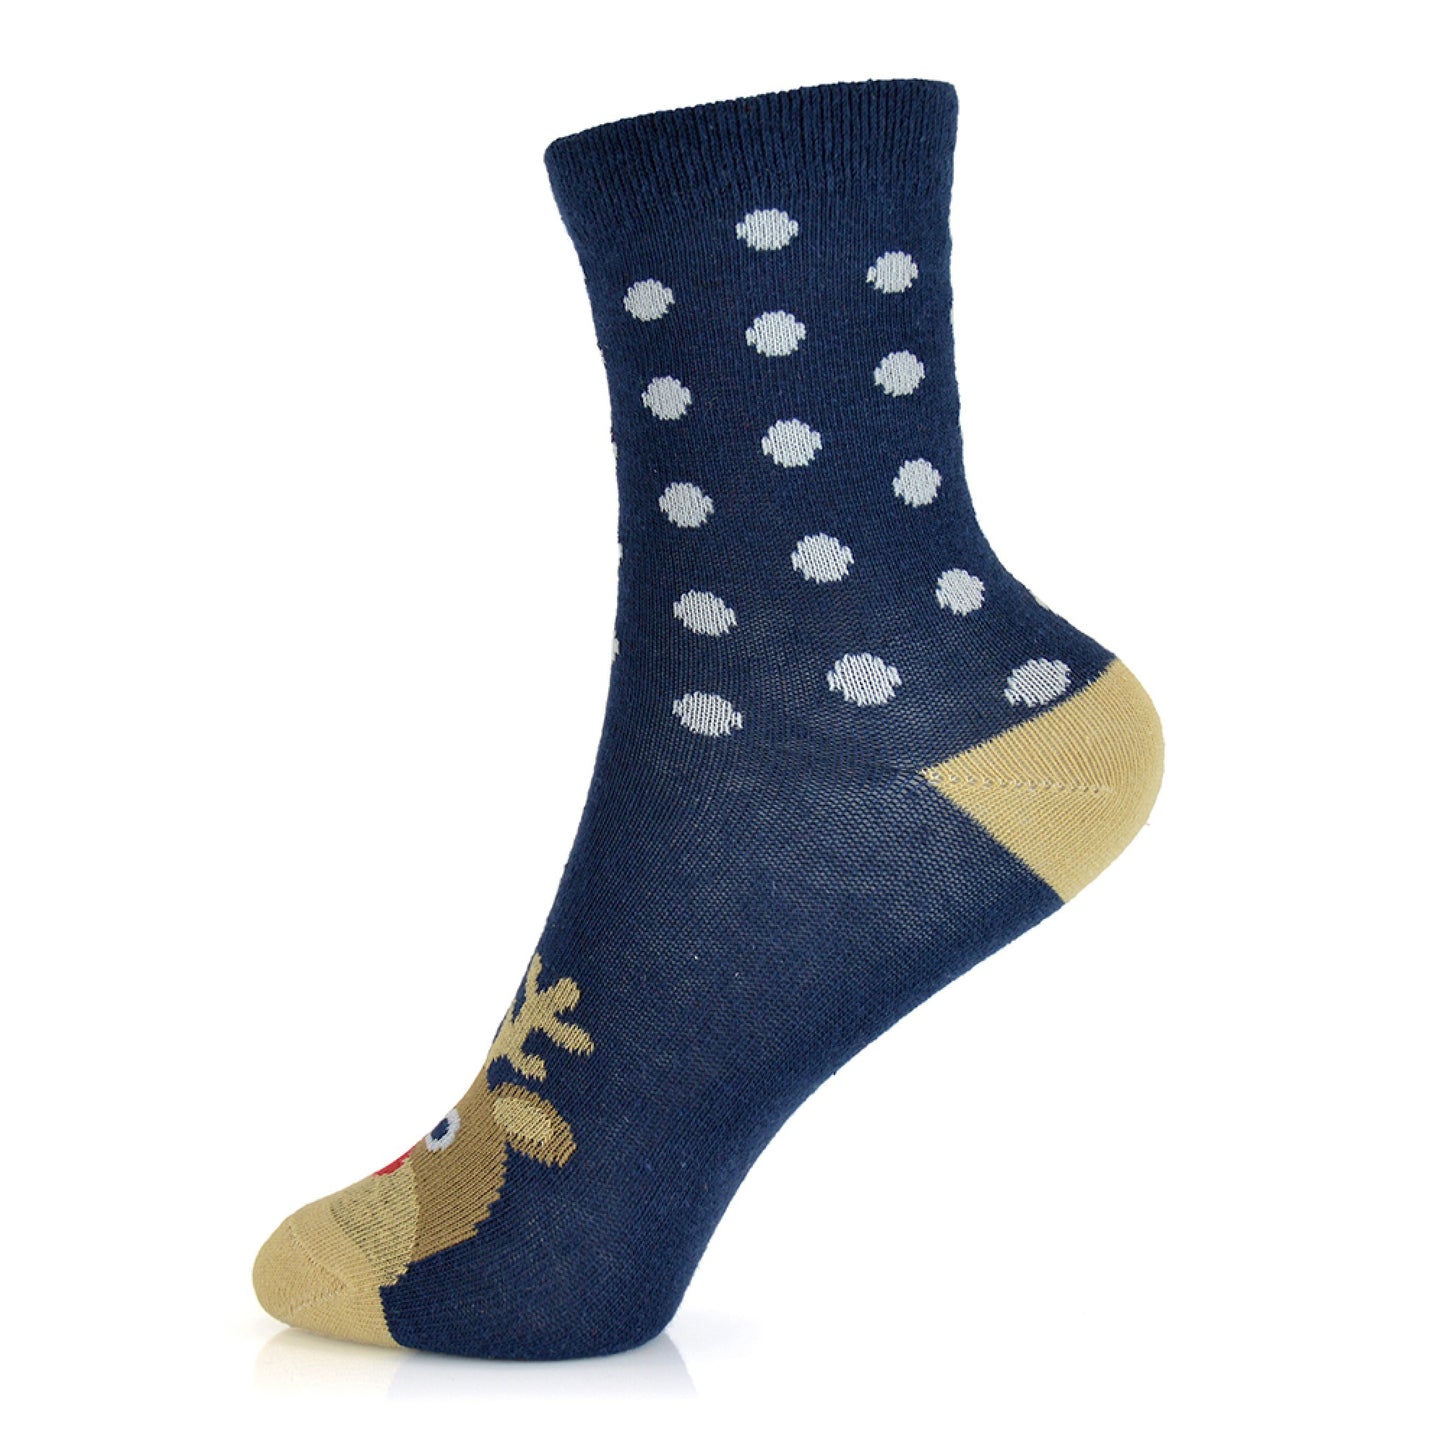 Christmas Children's Socks 6 Pack Patterned Cotton Rich